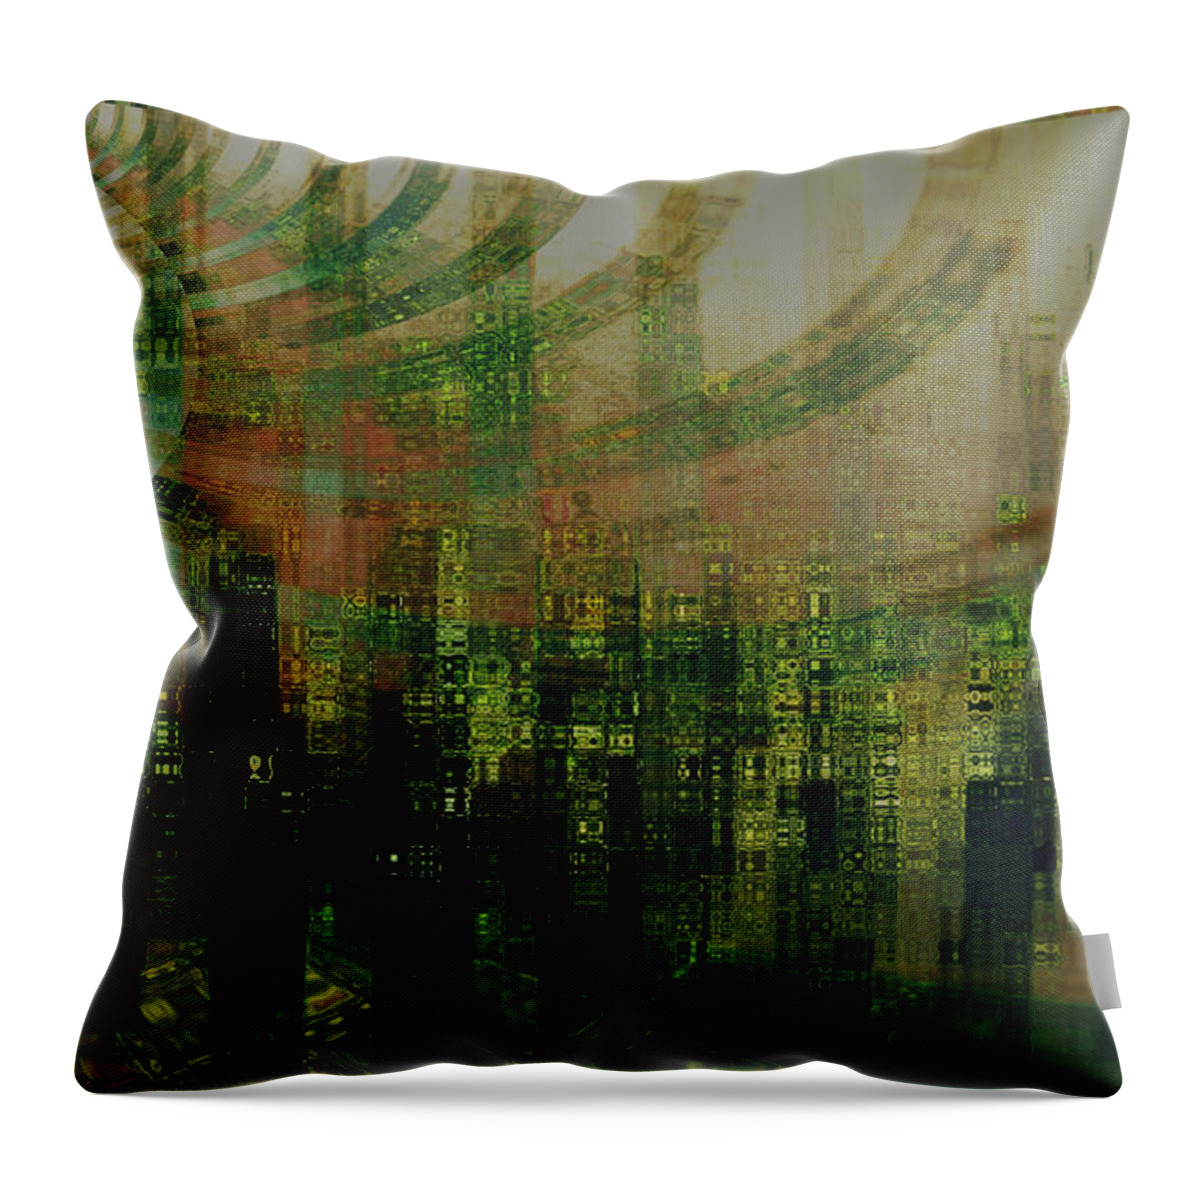 Pattern Throw Pillow featuring the digital art Tin City by Kathy Sheeran